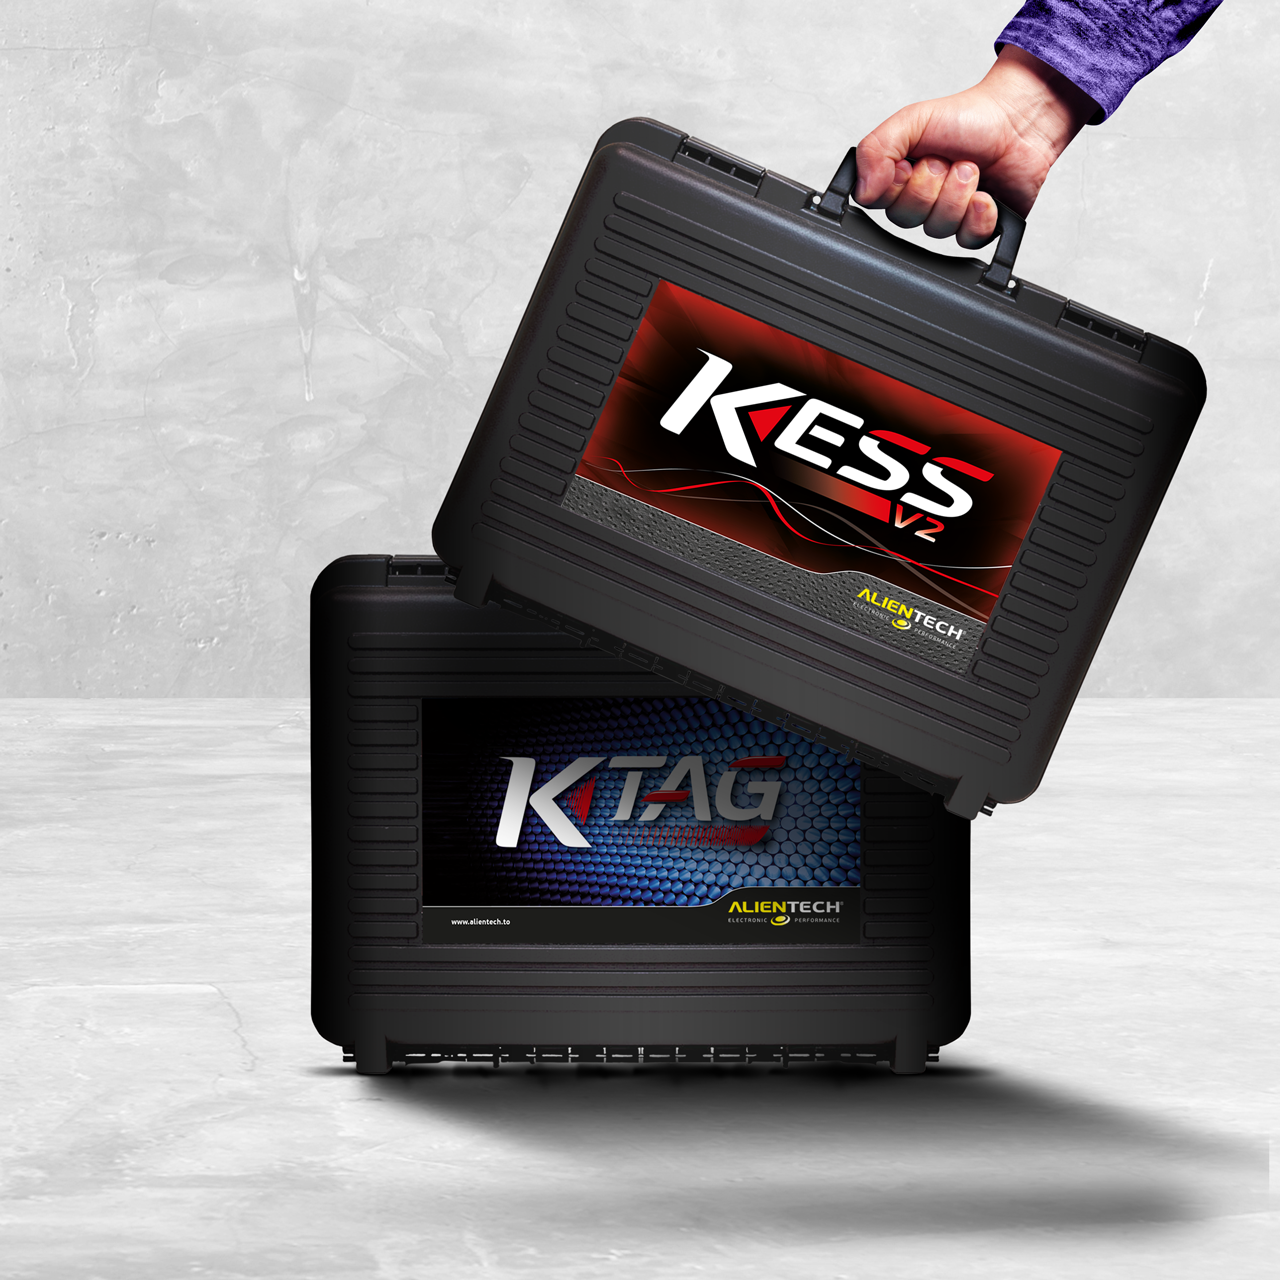 KESS V2.23 OBD2 Manager Tuning Kit HW V4.036 No Token Limited Master  Version - AliExpress